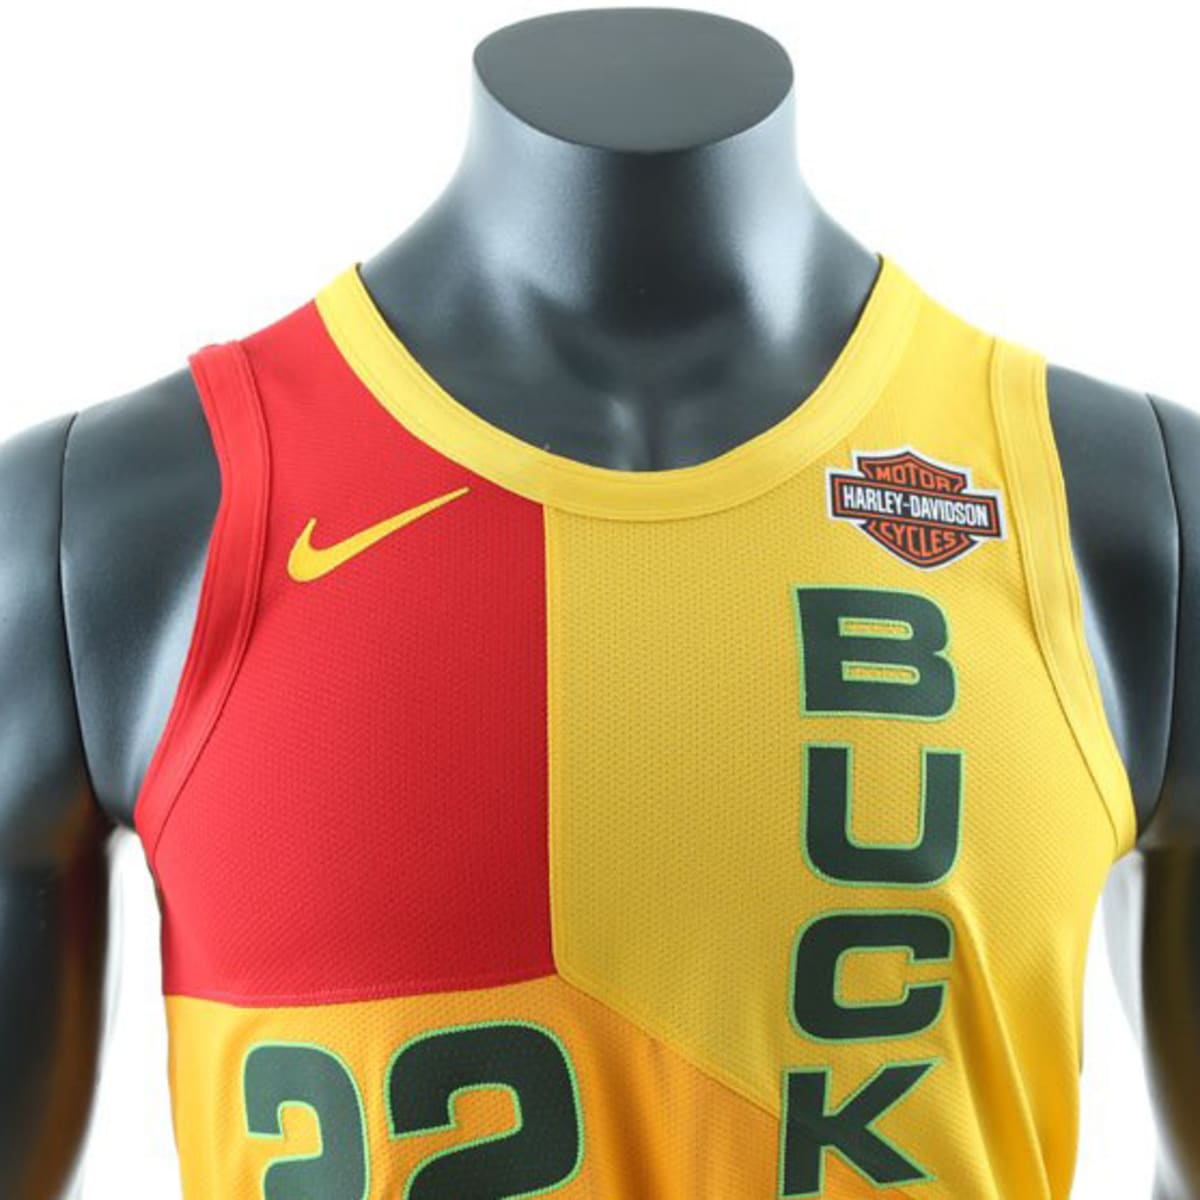 Bucks city edition jerseys inspired by MECCA era court - Sports Illustrated